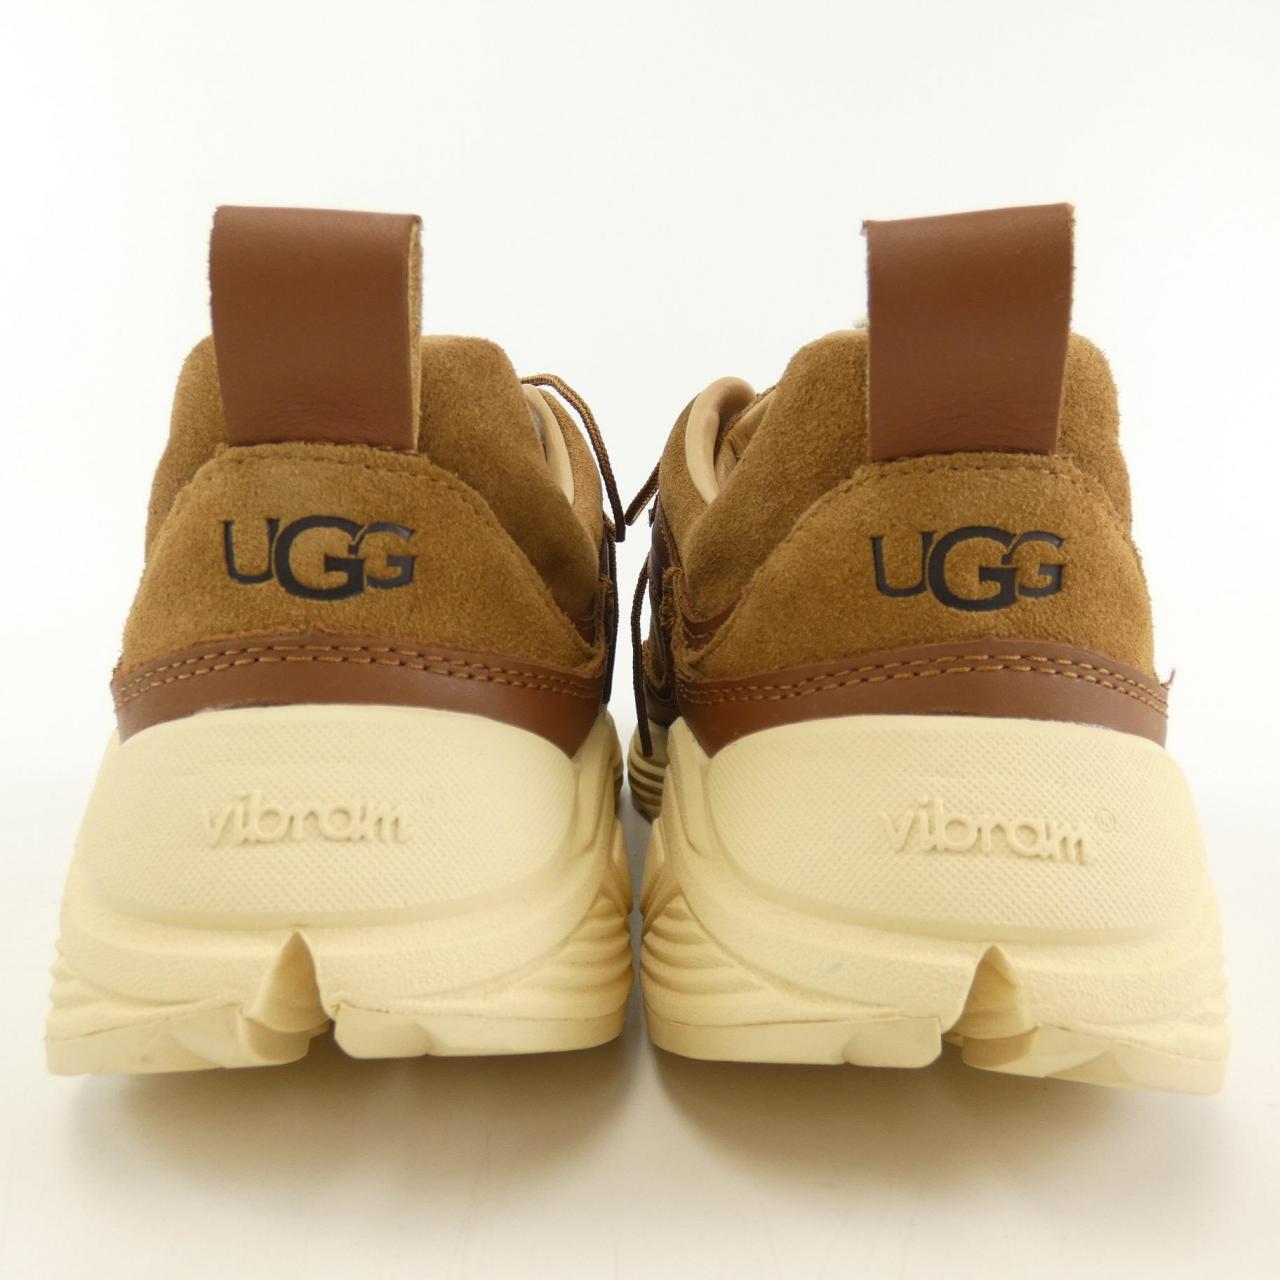 UGG sneakers